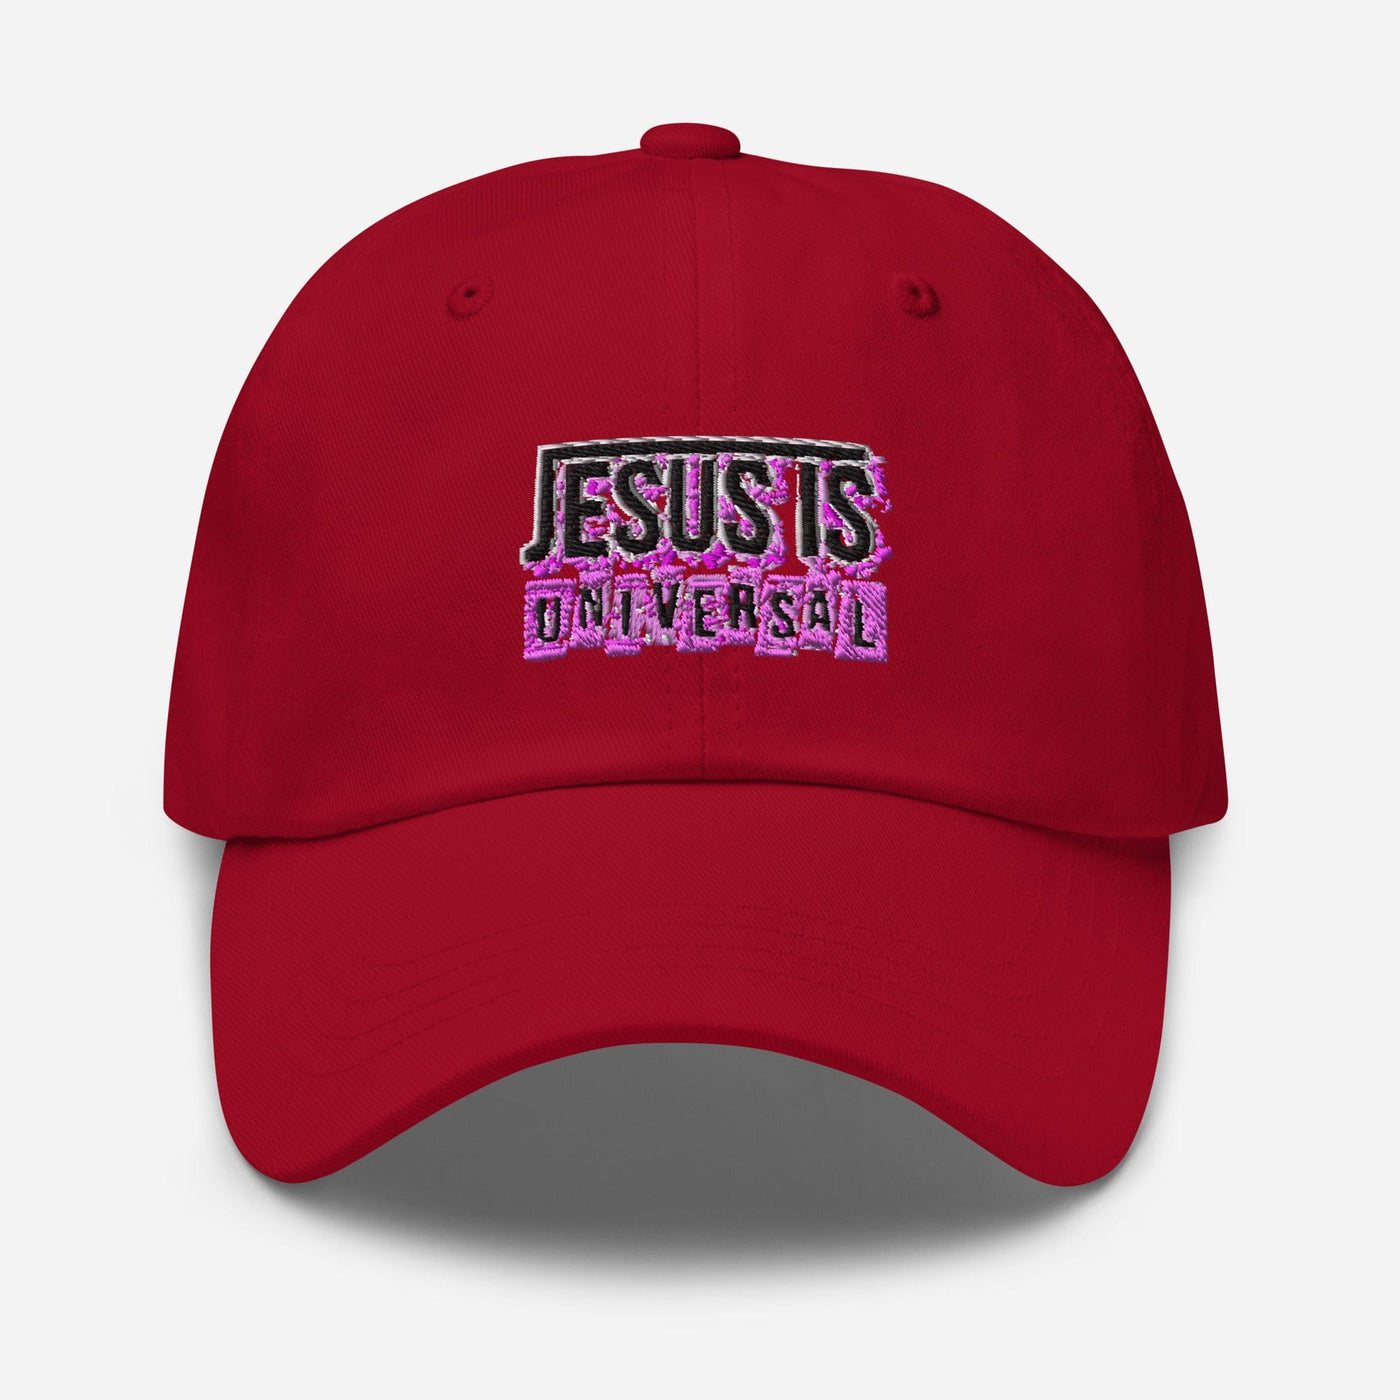 F&H Christian Jesus Is Universal Baseball Hat